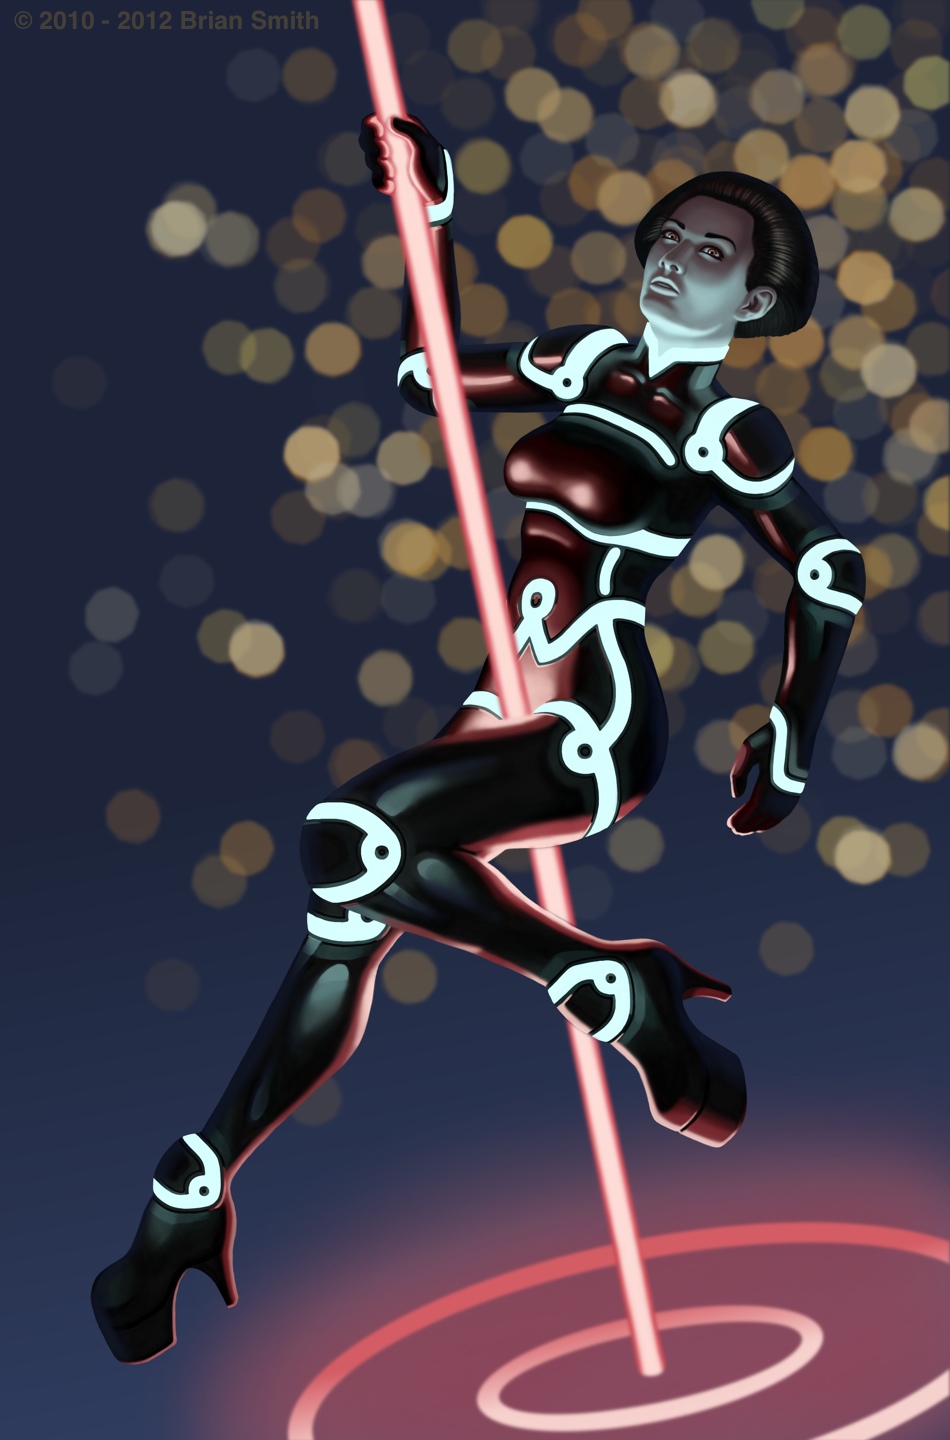 Tron pole dancer